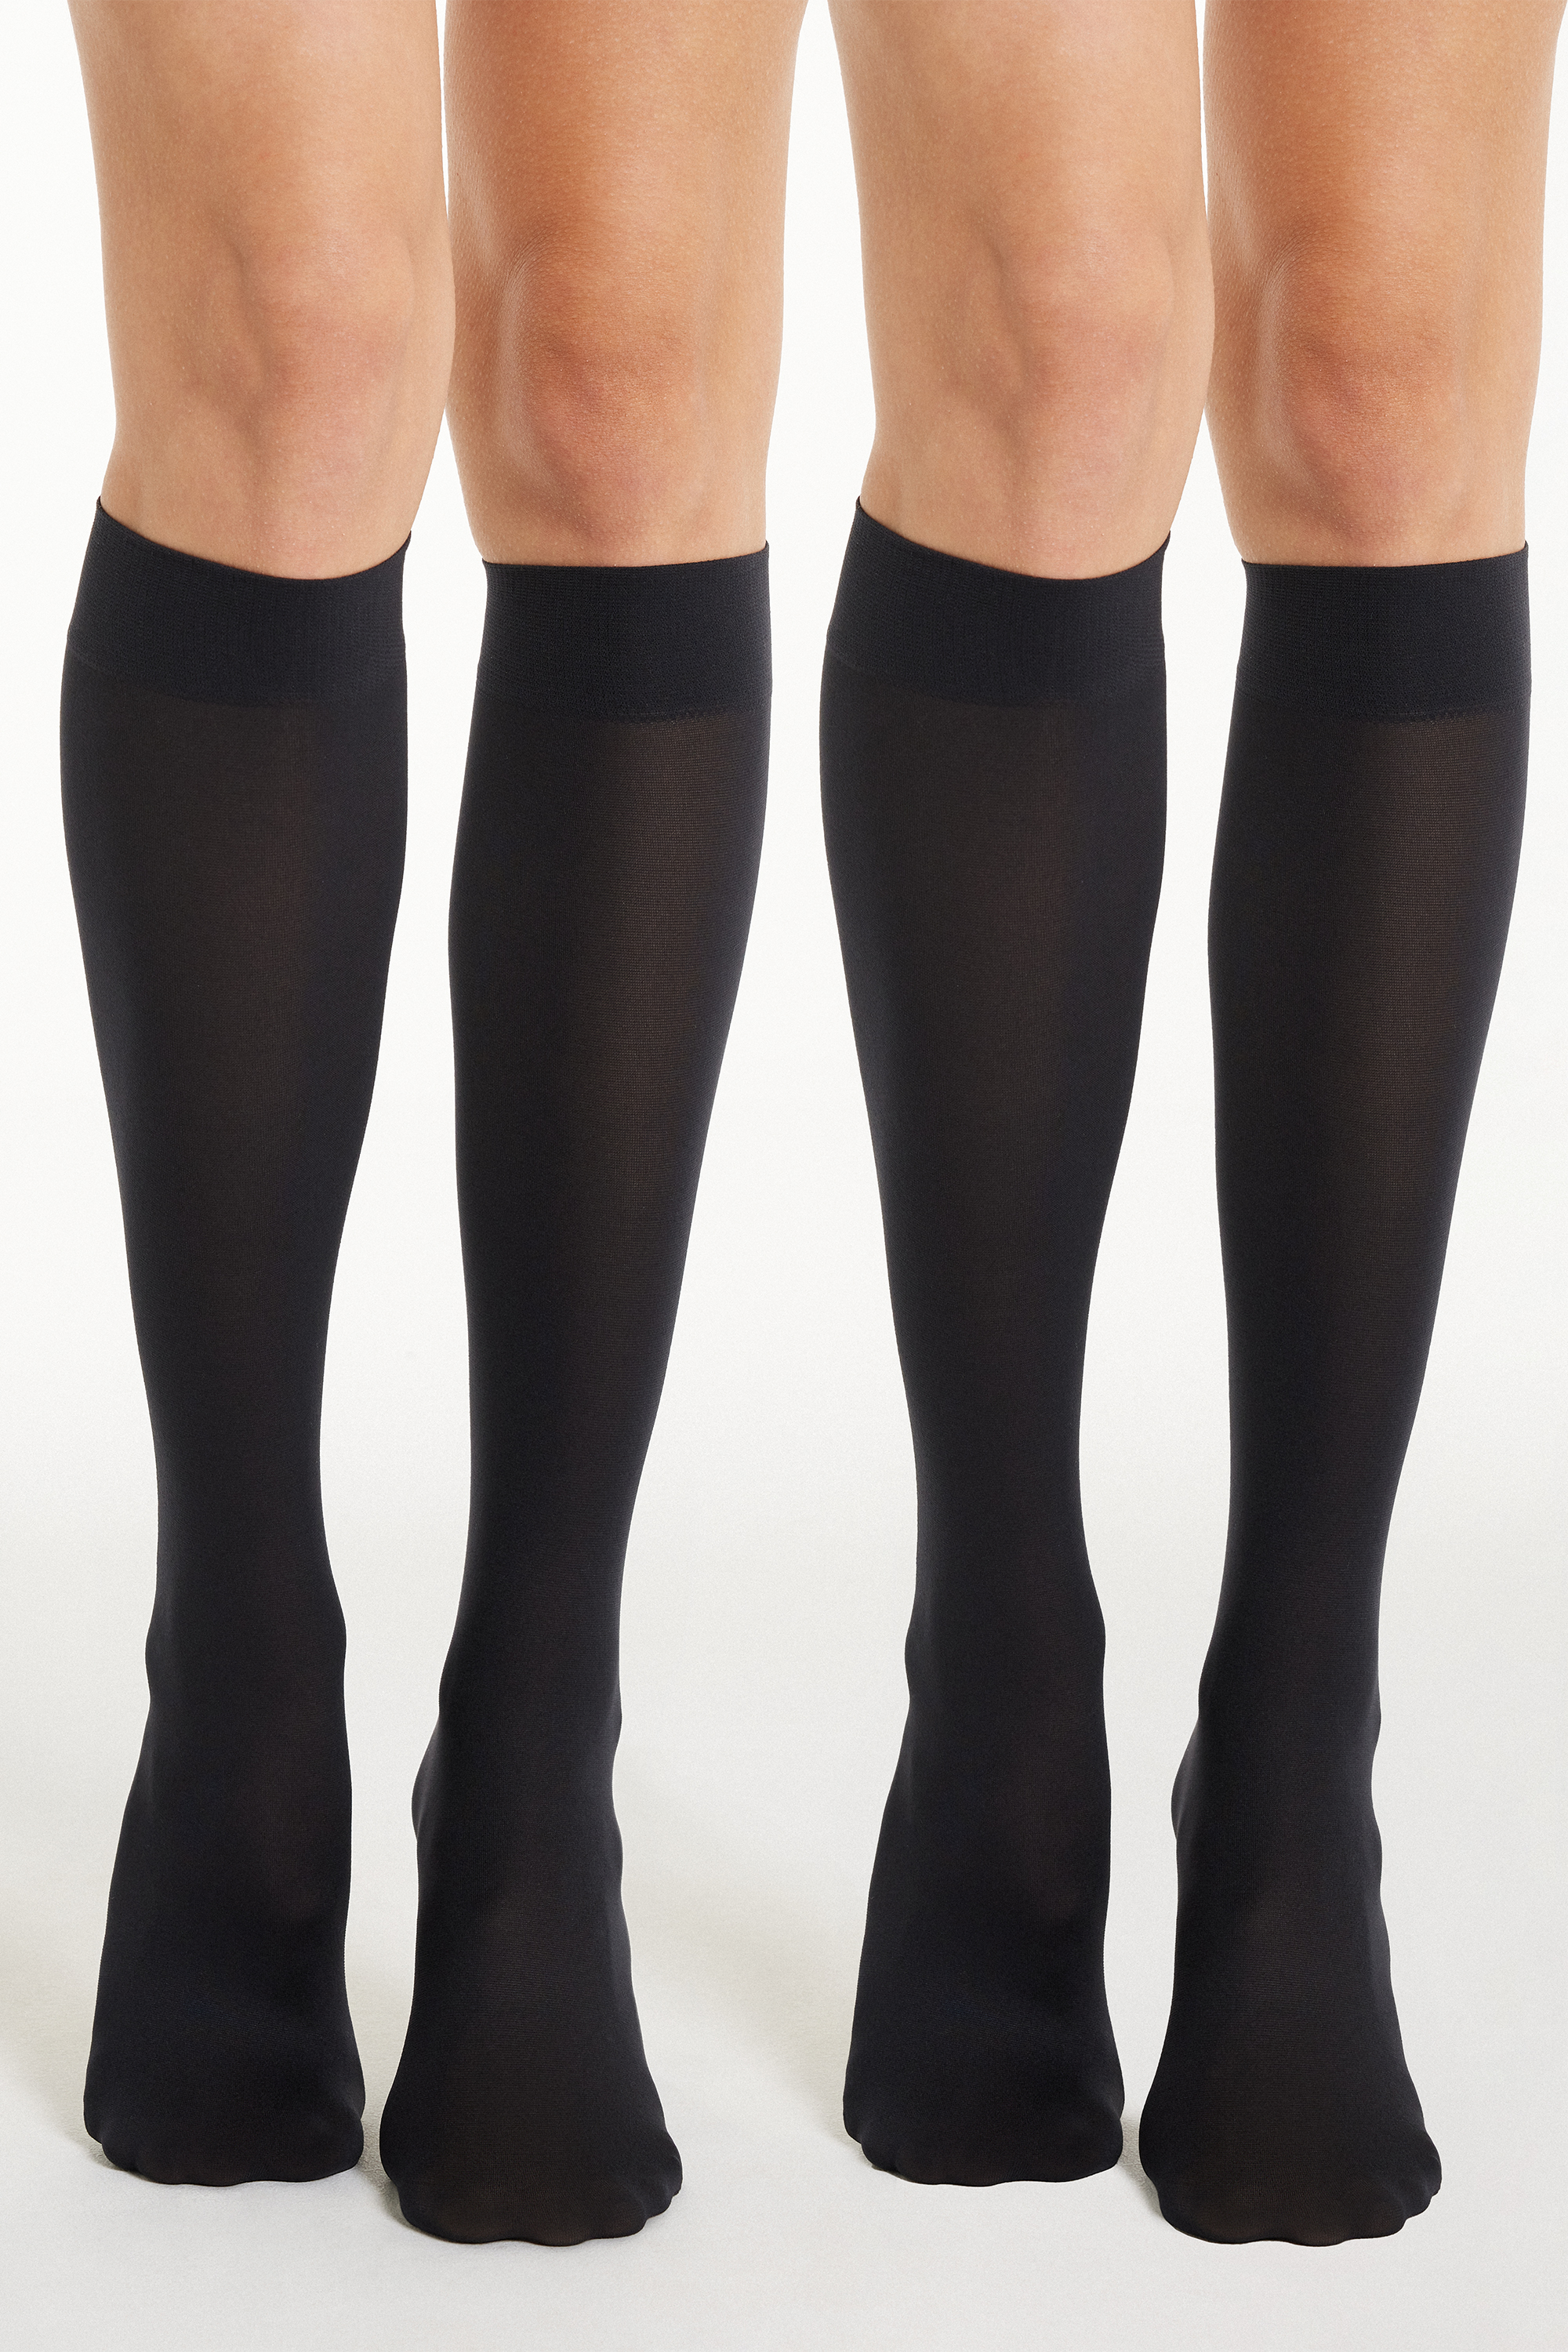 2 Pairs of 50 Denier Microfiber Knee-High Stockings